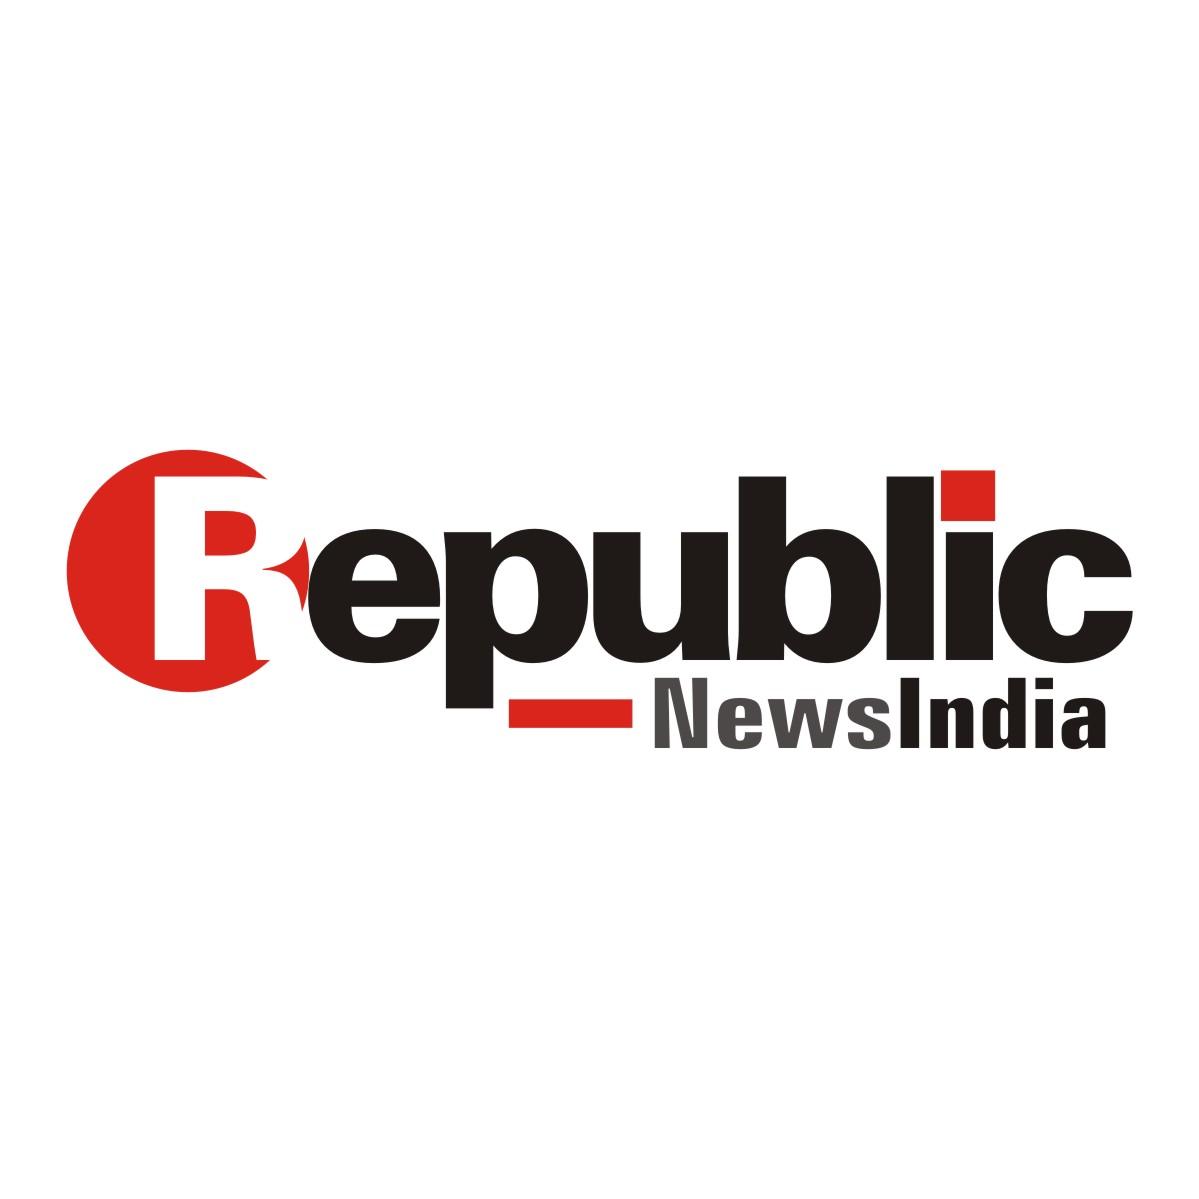 Avatar - Republic News India